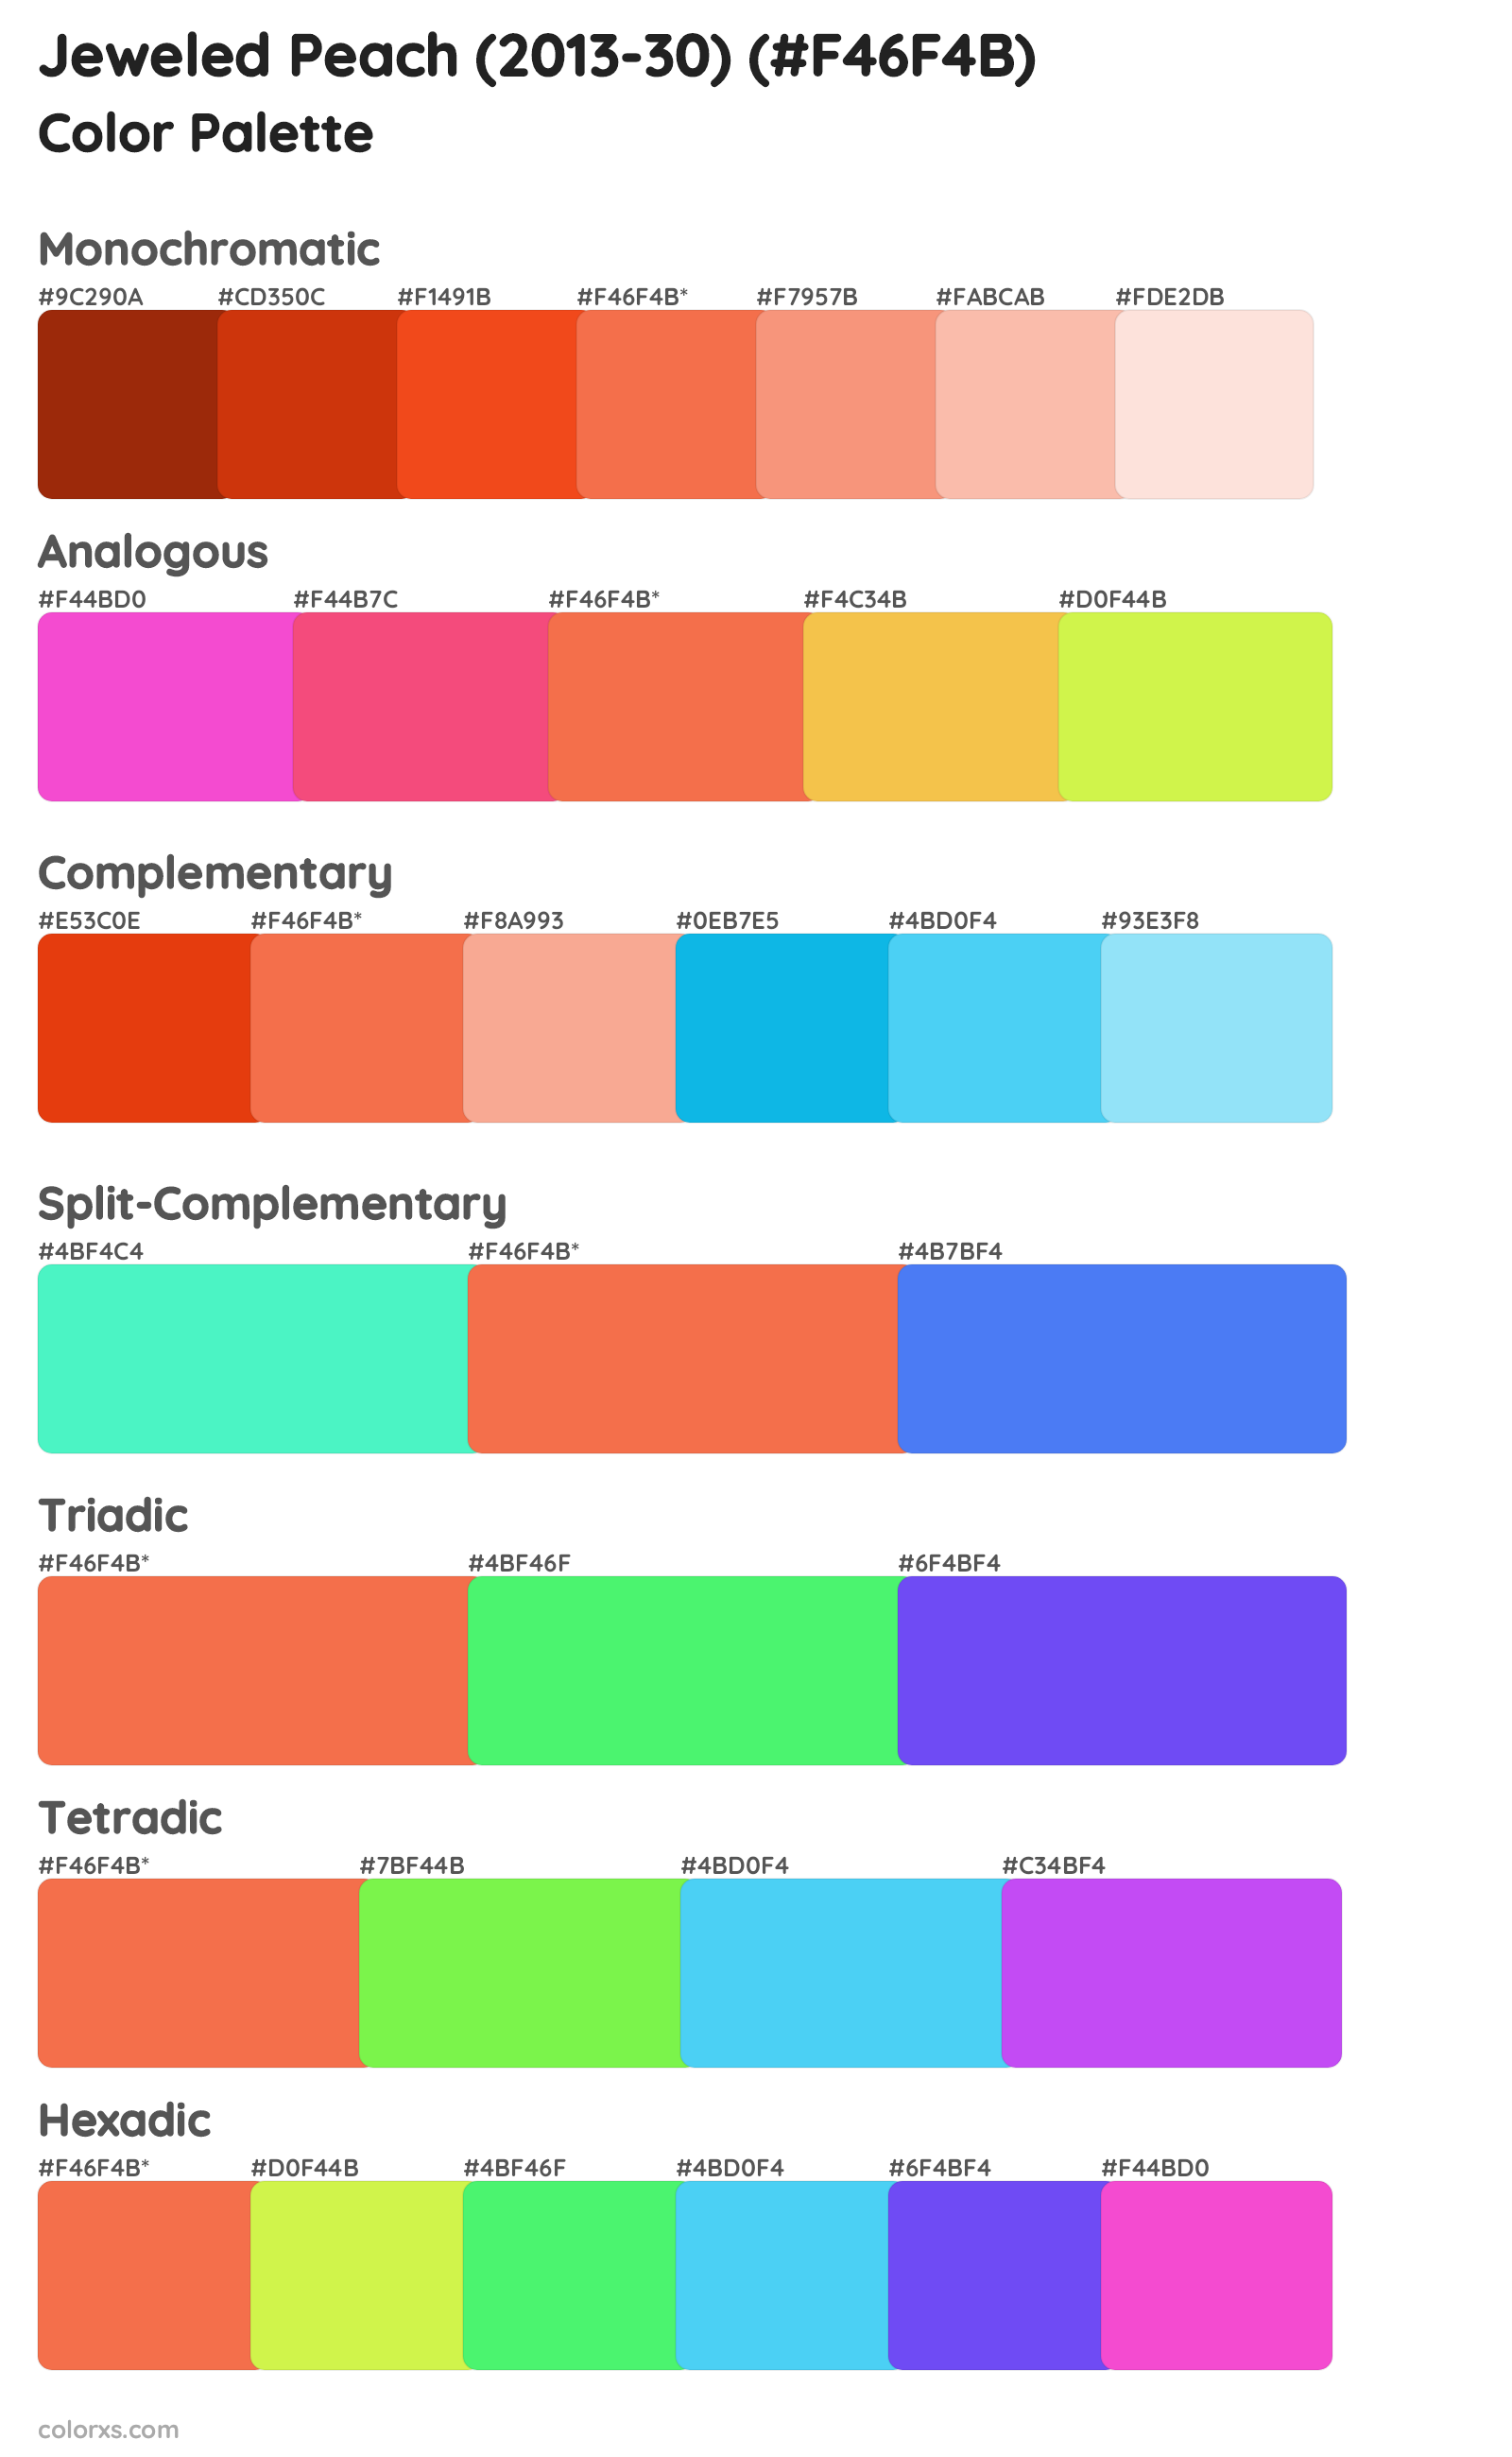 Jeweled Peach (2013-30) Color Scheme Palettes